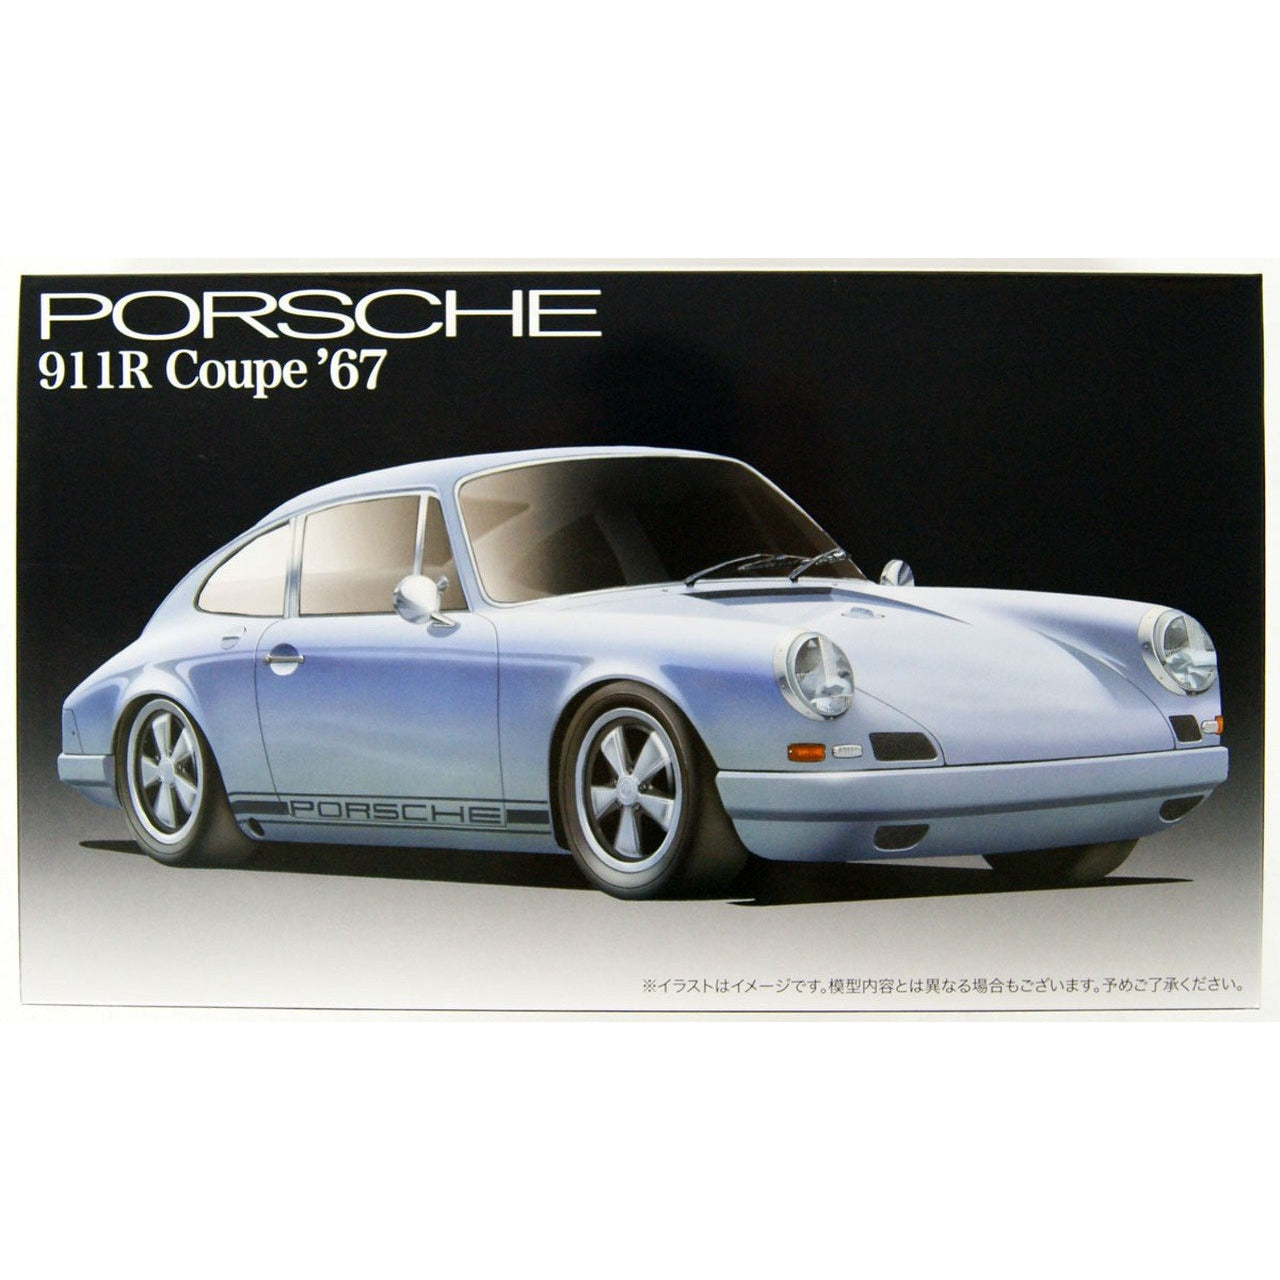 Porsche 911R Coupe '67 1/24 Model Car Kit #126678 by Fujimi